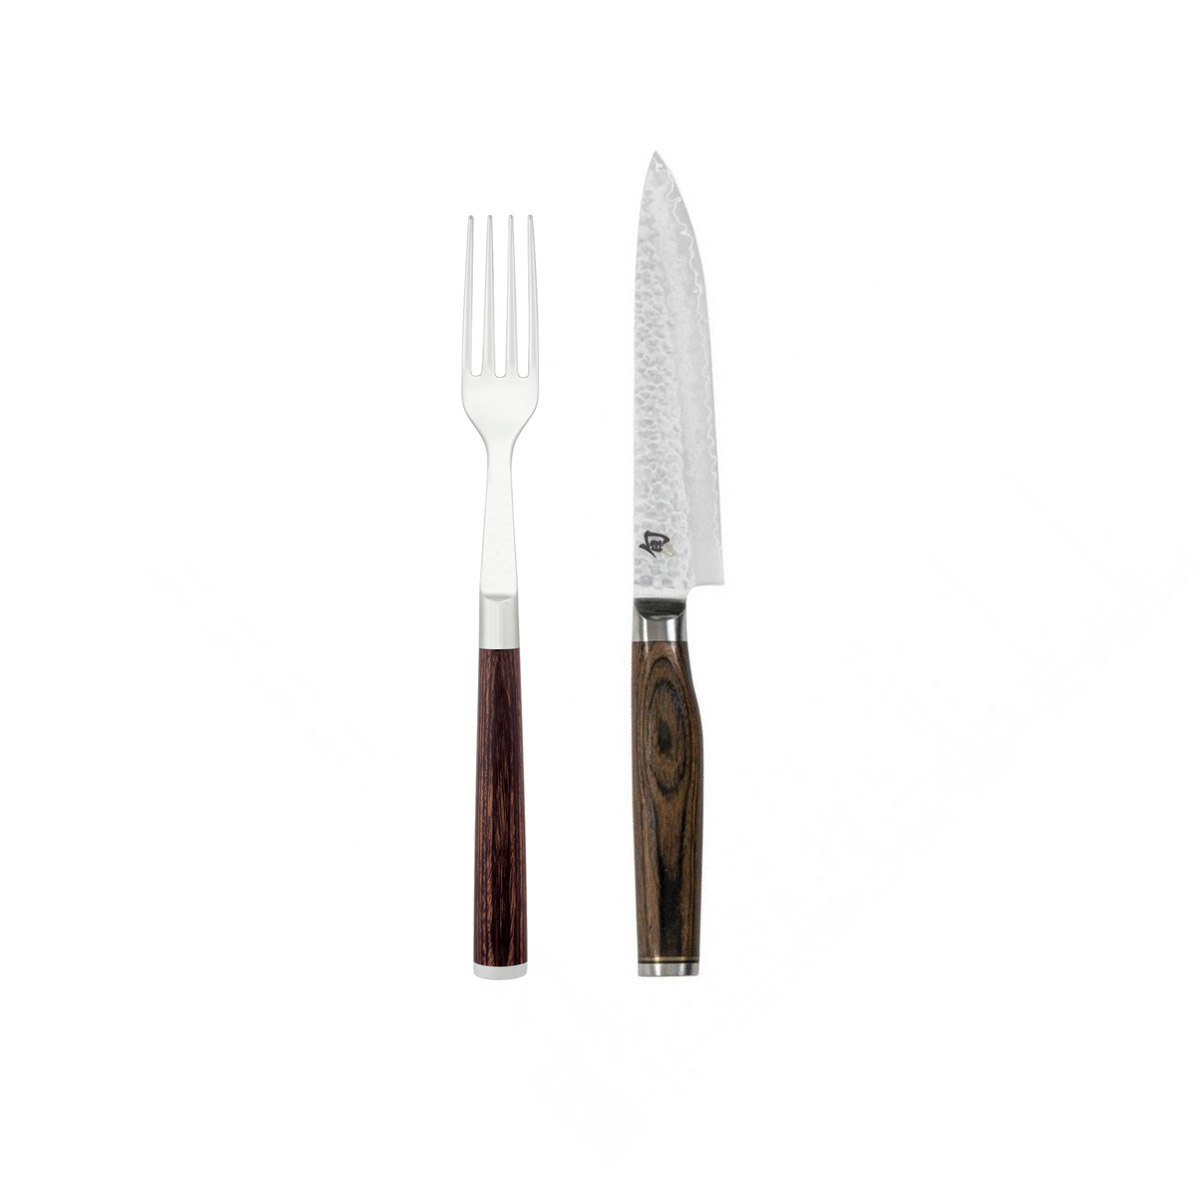 KAI Shun Premier Tim Mälzer Serie Gabel & Steakmesser Set / Griff aus dunklem Pakkaholz